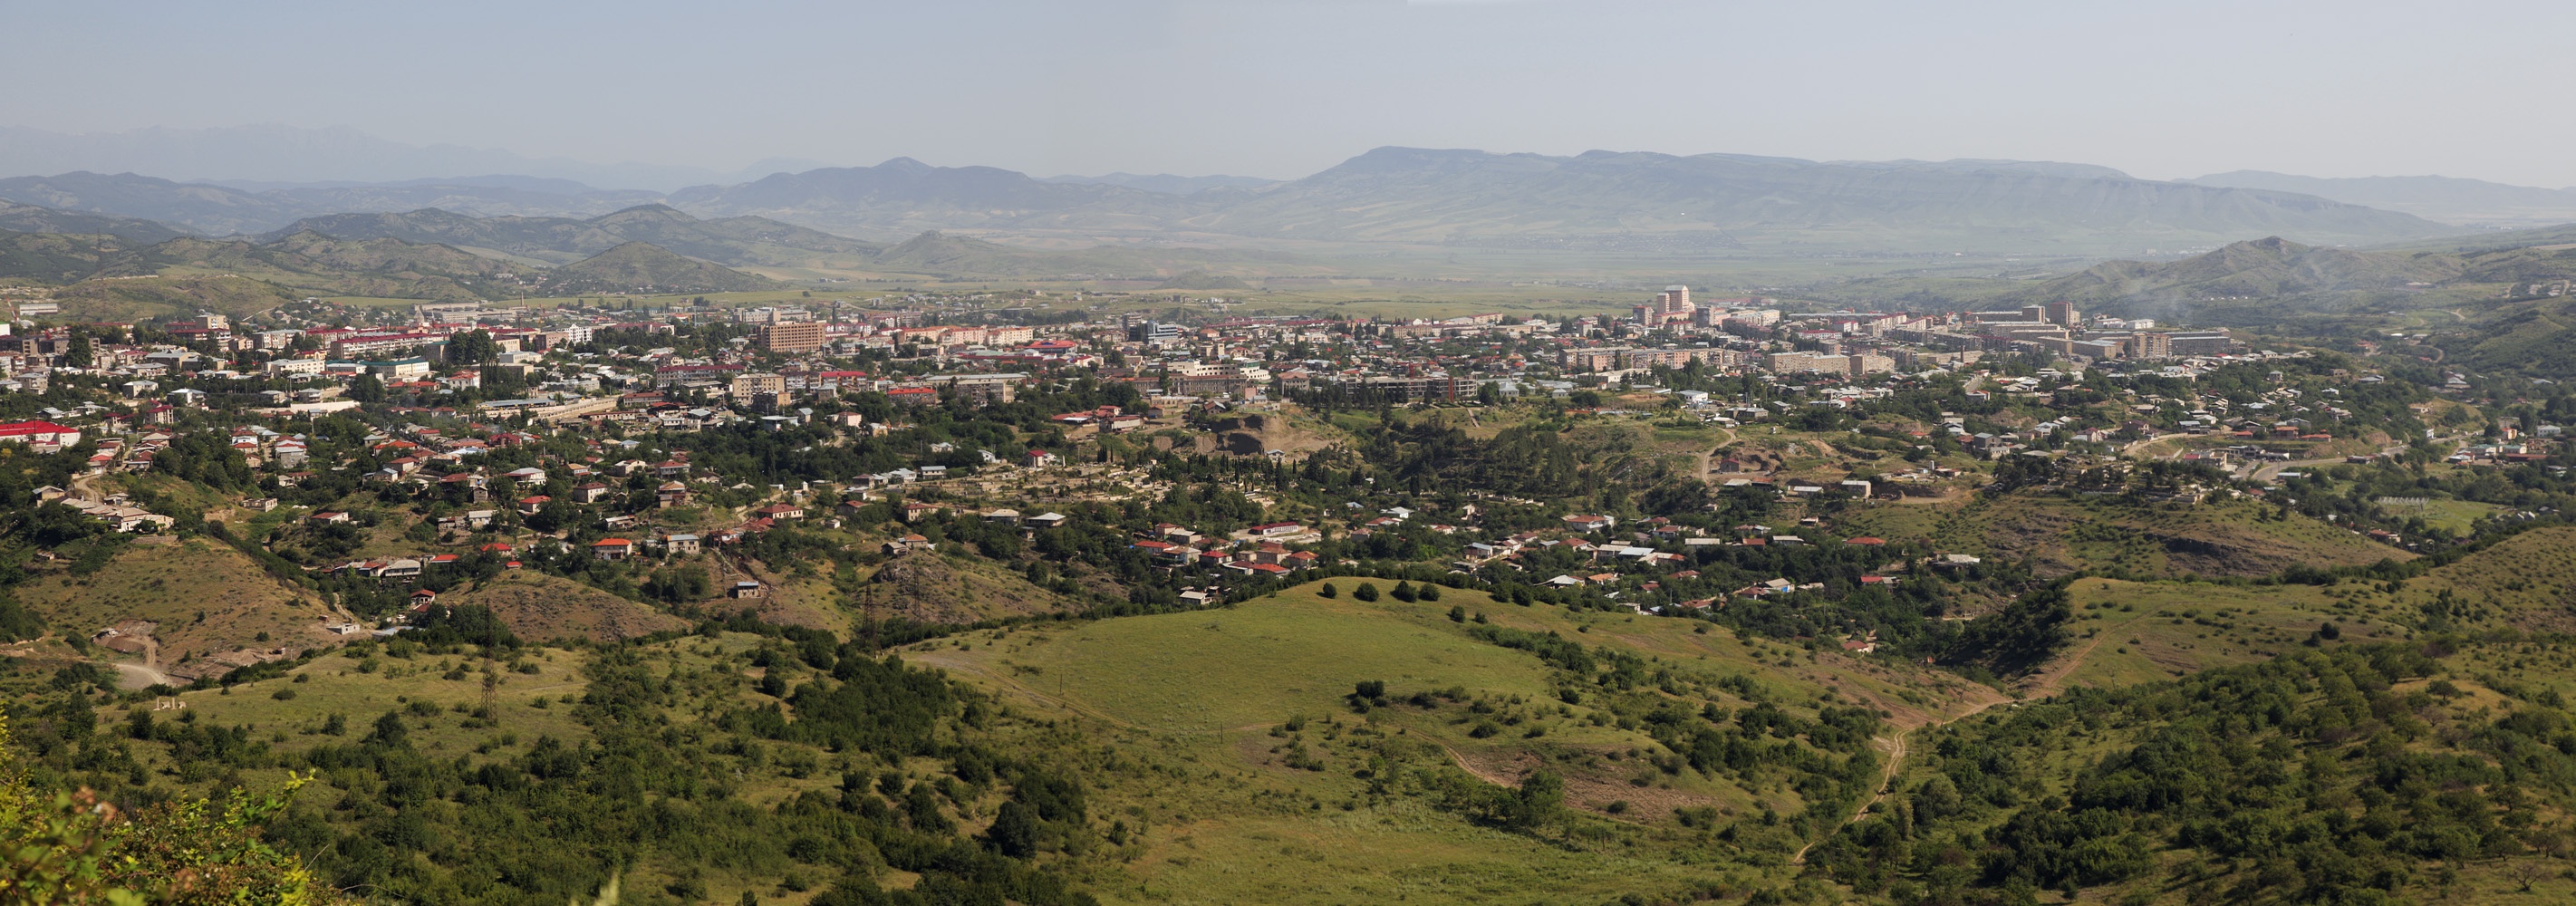 bill-hocker-stepanakert-nagorno-karabakh-2013